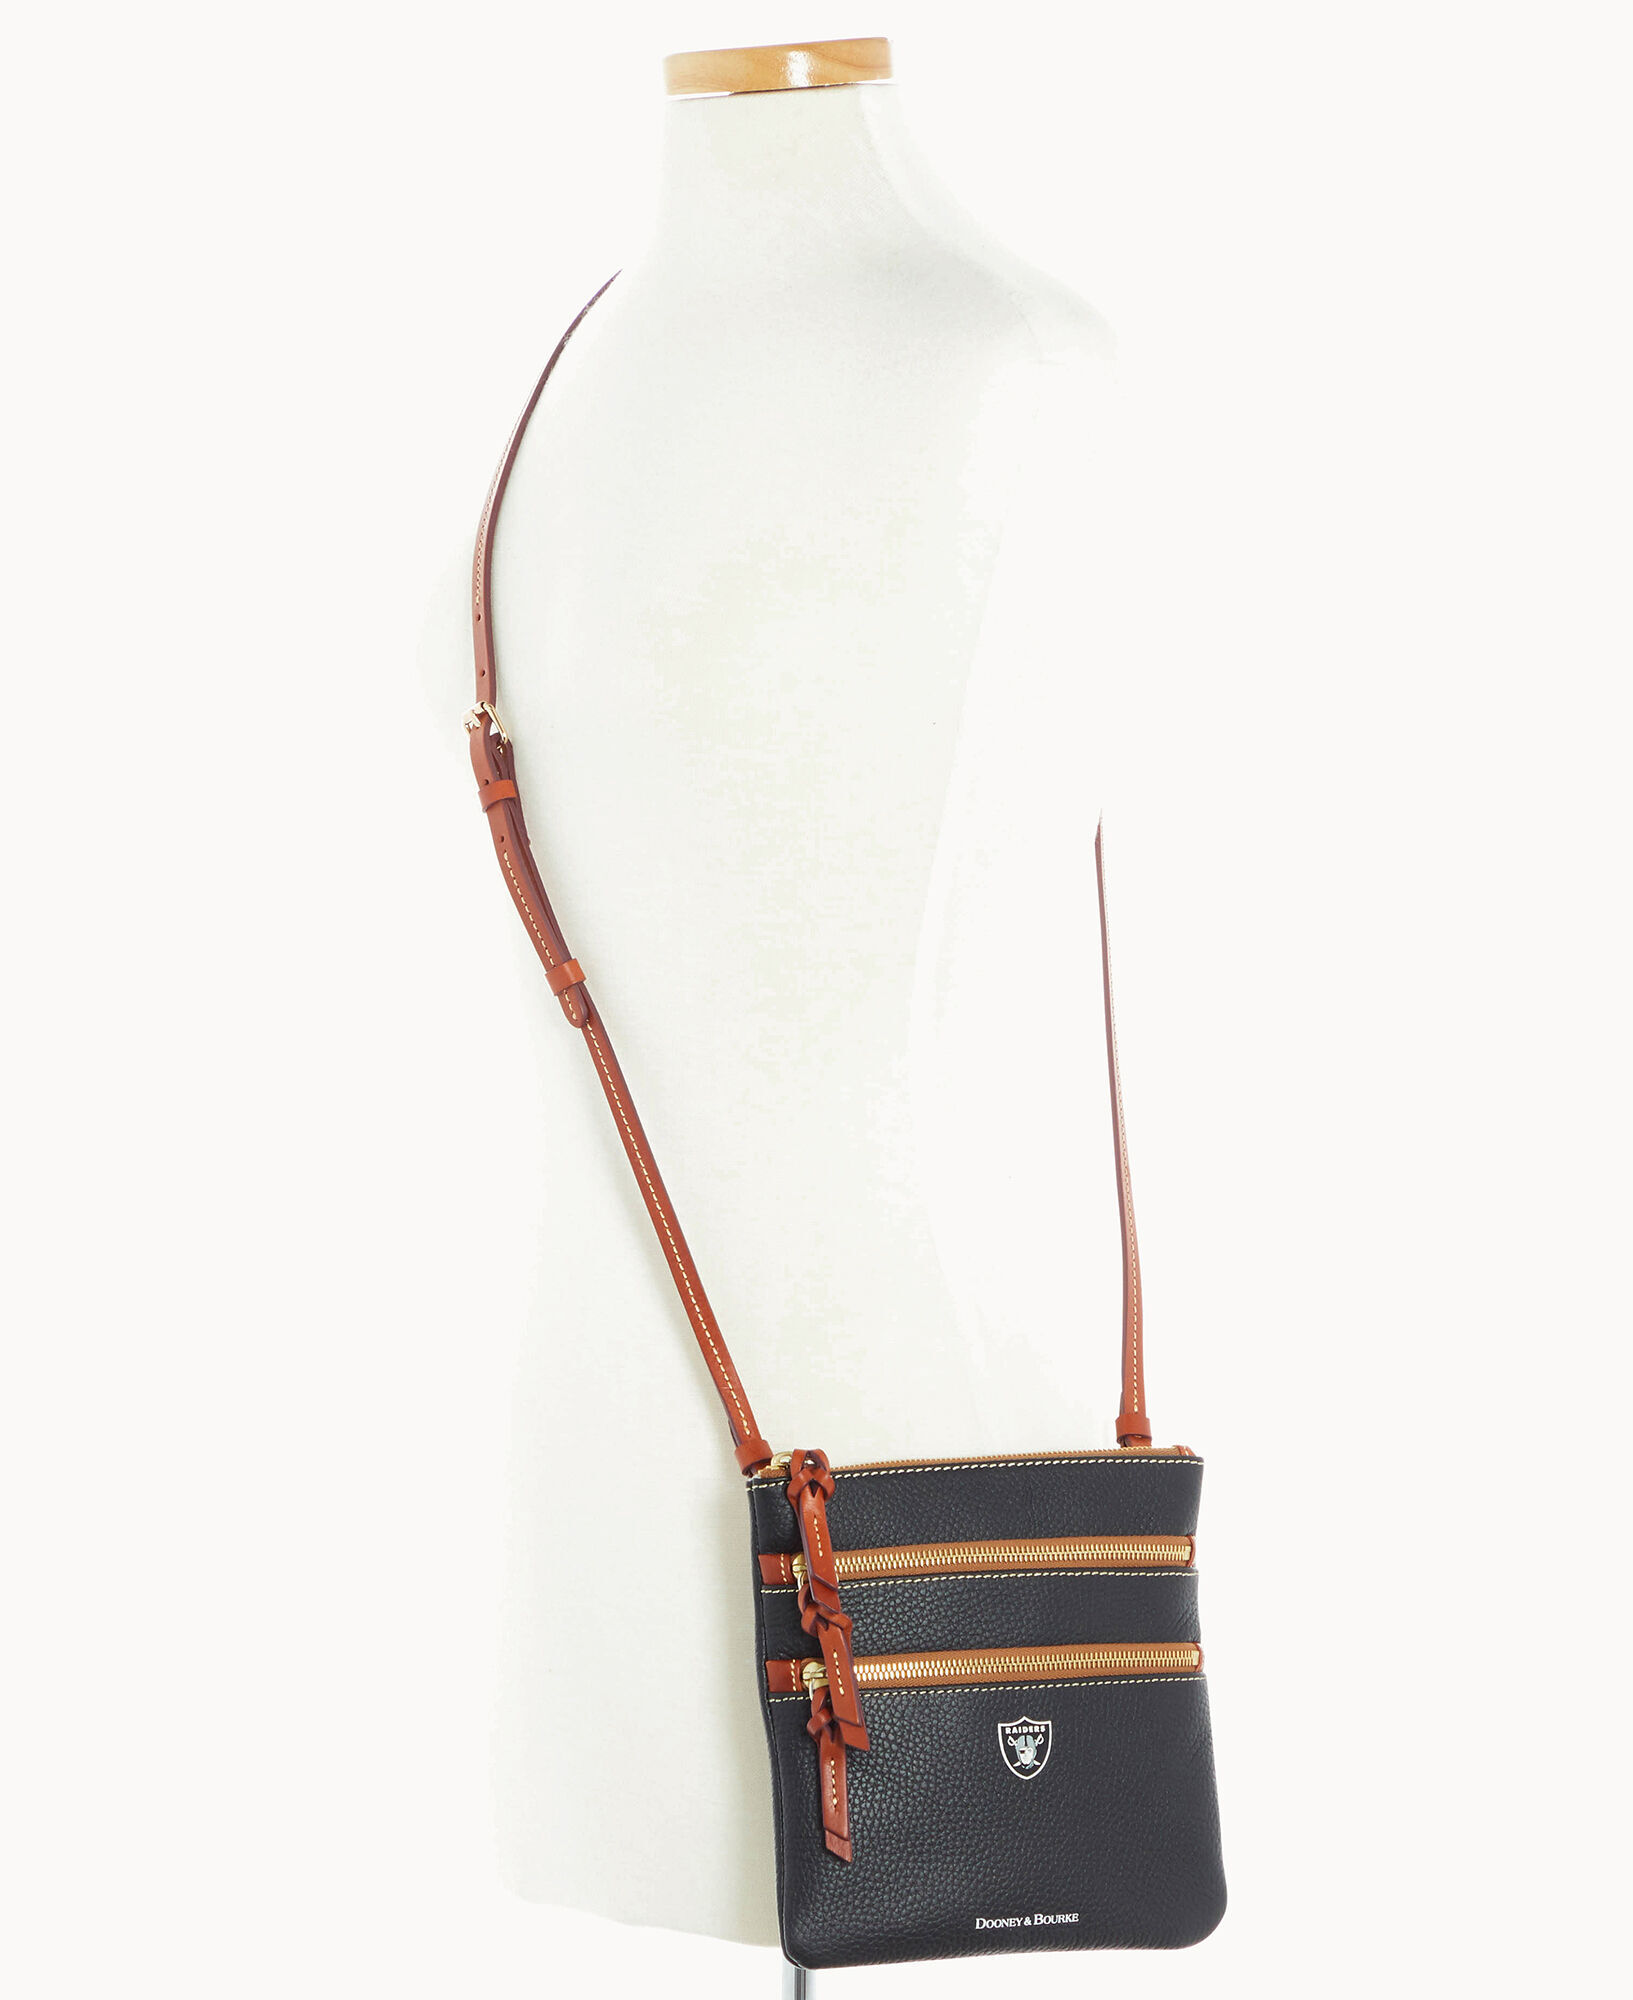 Dooney & Bourke Florentine Leather Triple Zip Crossbody Bag Purse Black